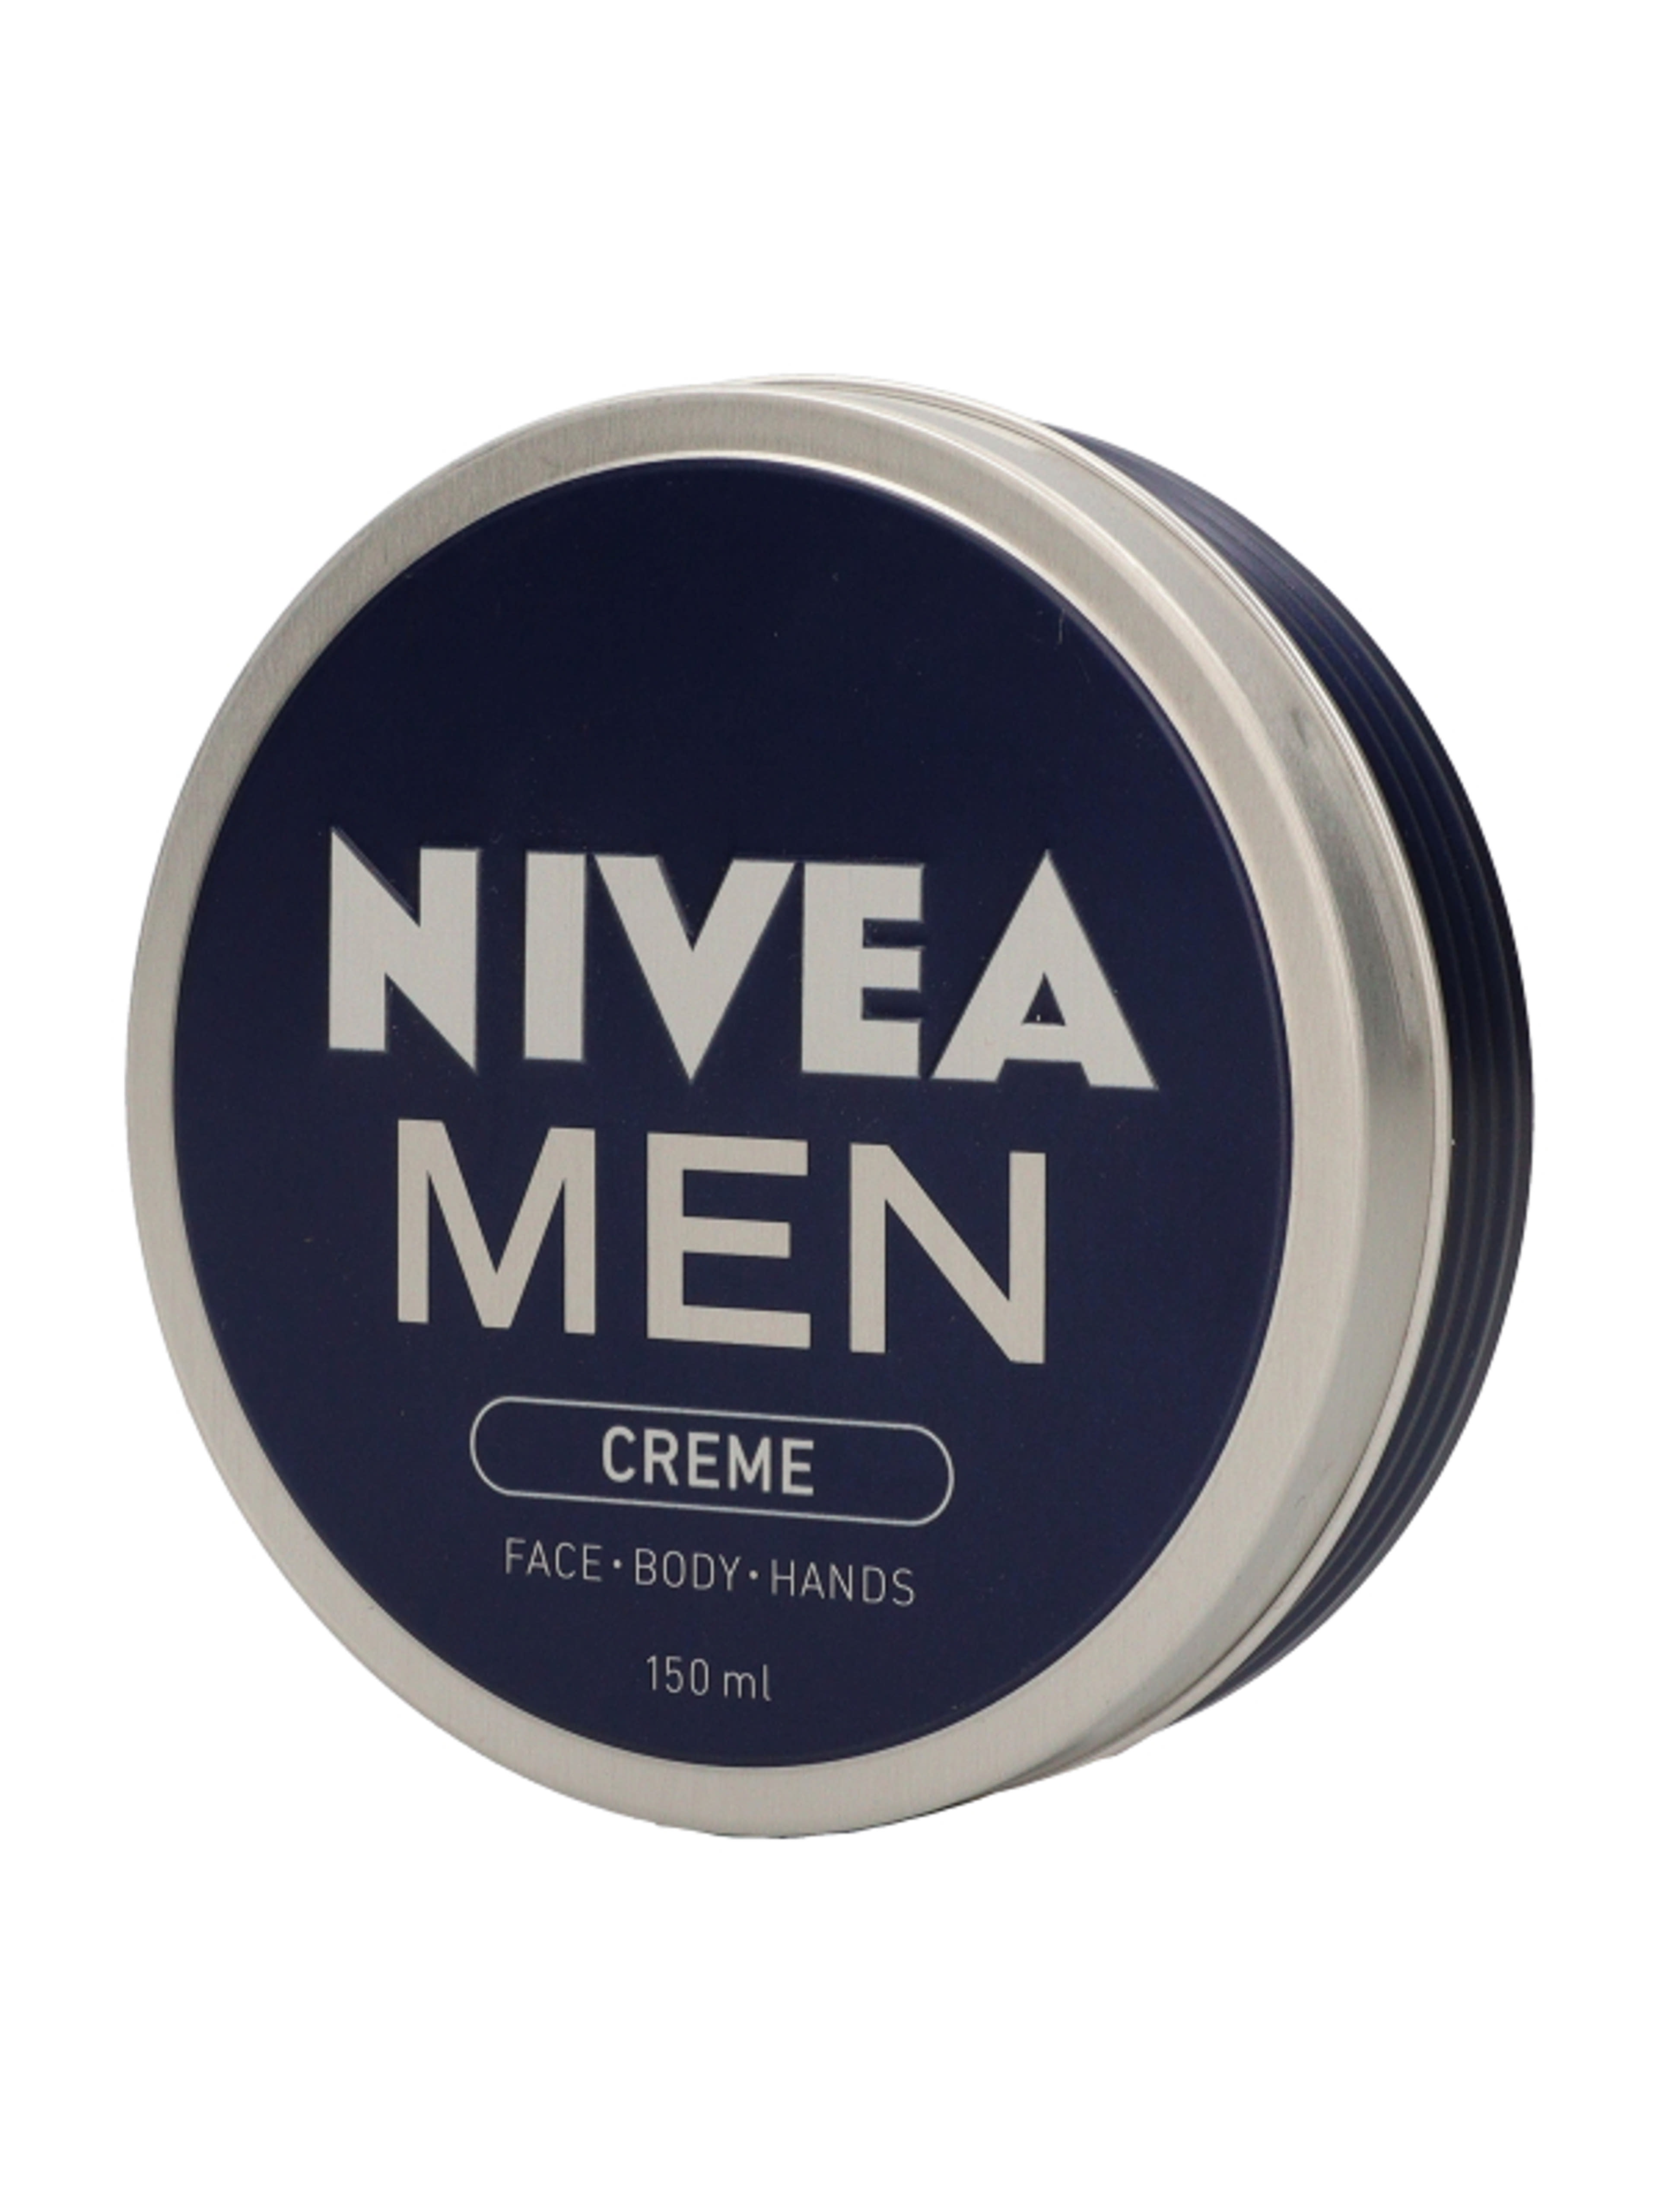 NIVEA MEN Creme - 150 ml-3